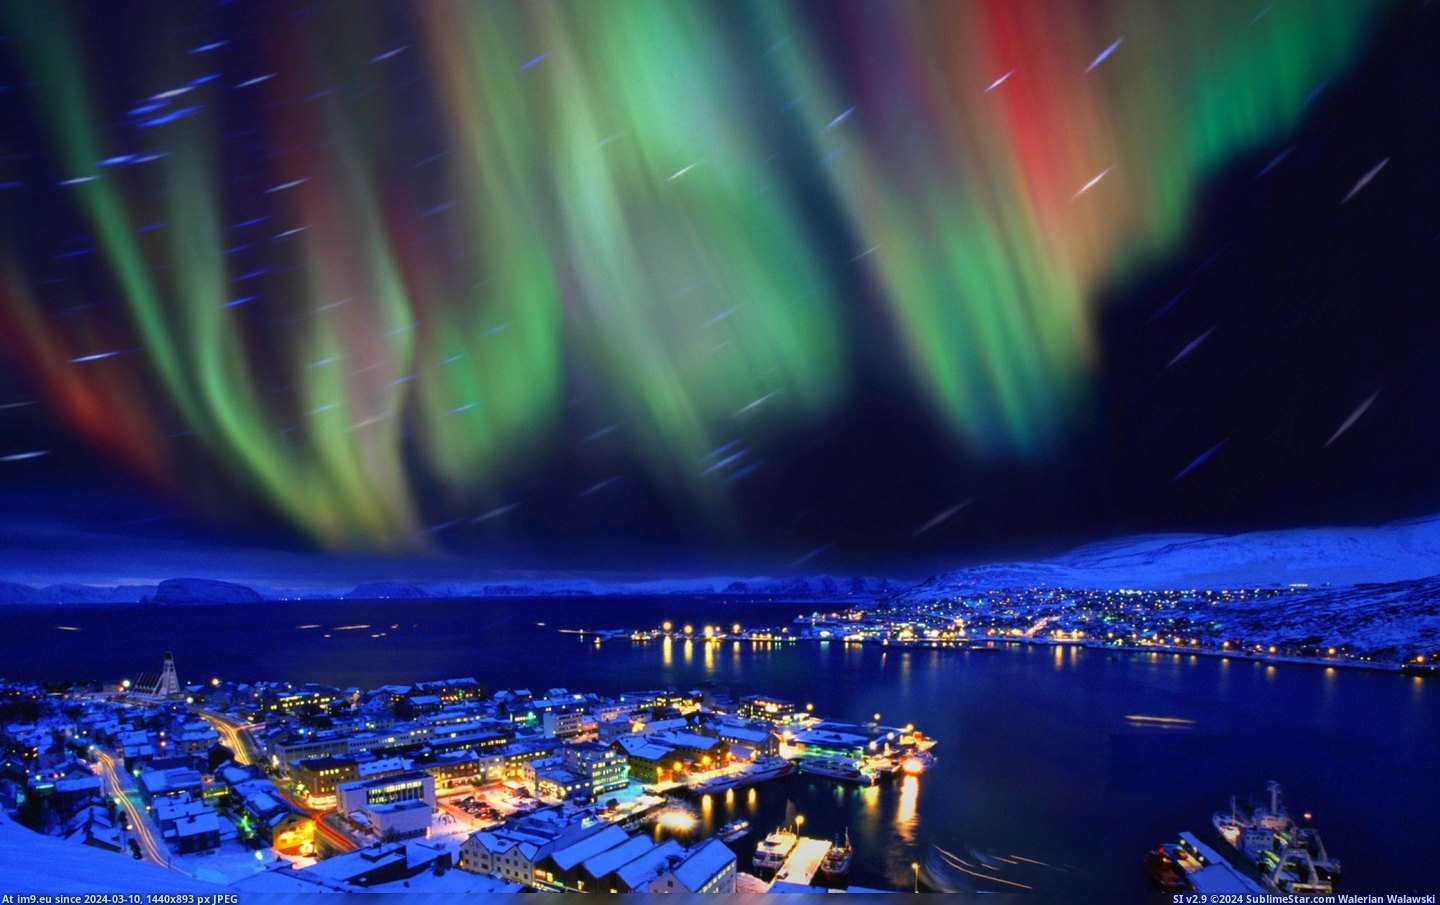 #Lights #Northern #Norway [Pics] Northern Lights Norway Pic. (Obraz z album My r/PICS favs))